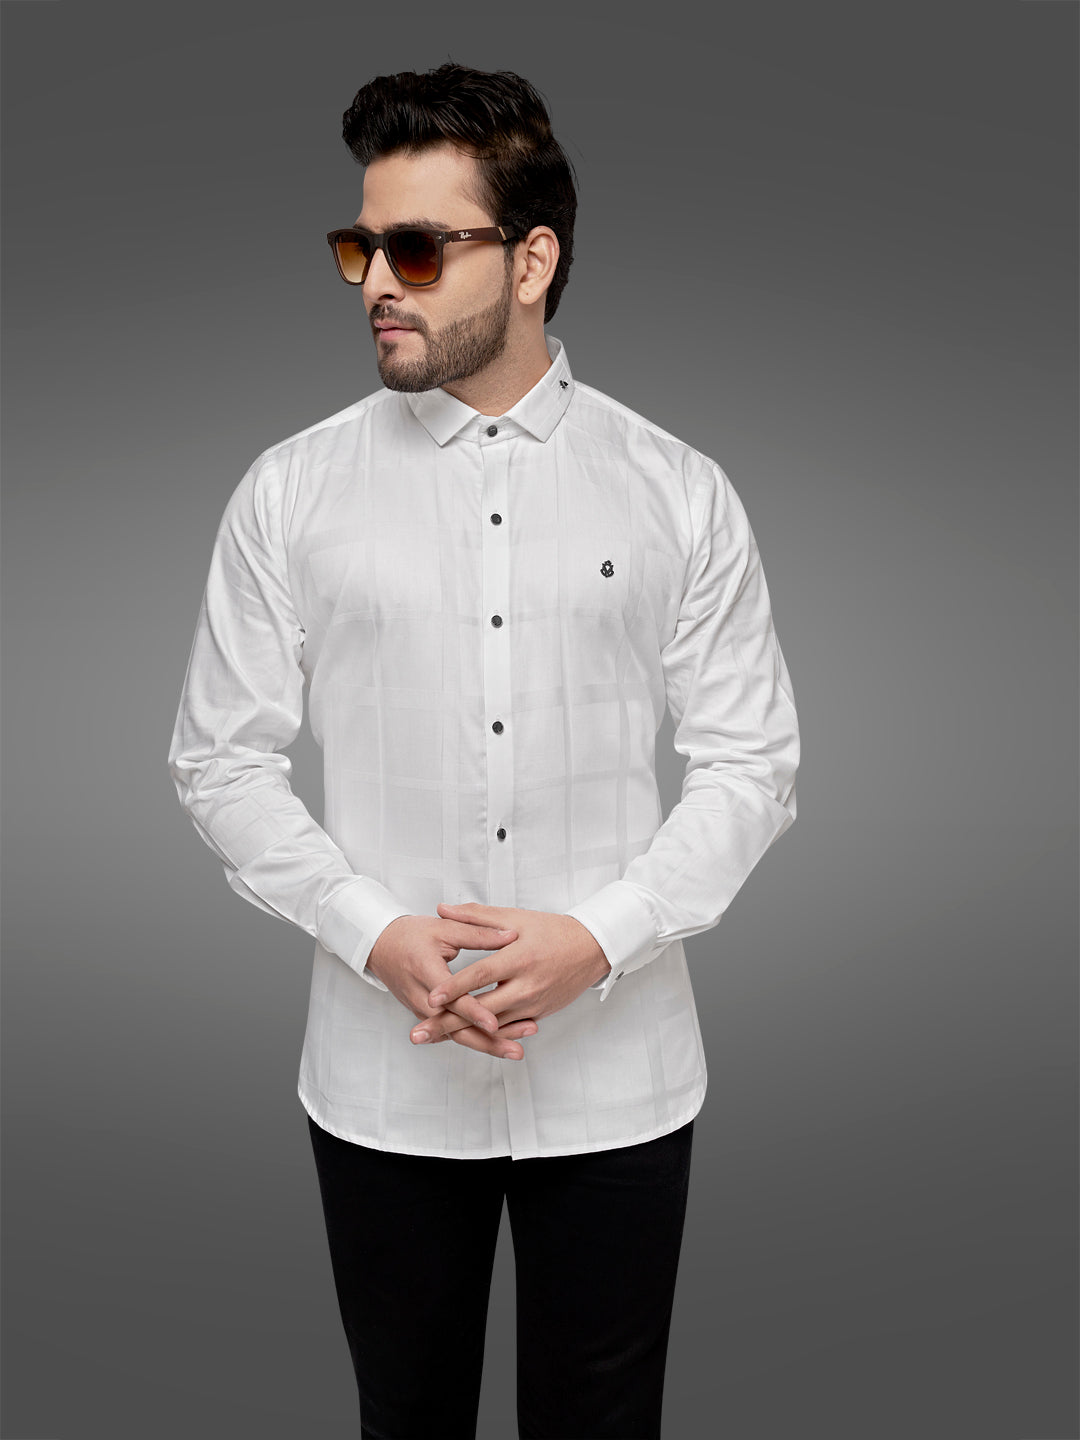 Black and White Self Checks Cocktail Shirt- Premium 60s CountsSelf Checks Cocktail Shirt- Premium 60s Counts White